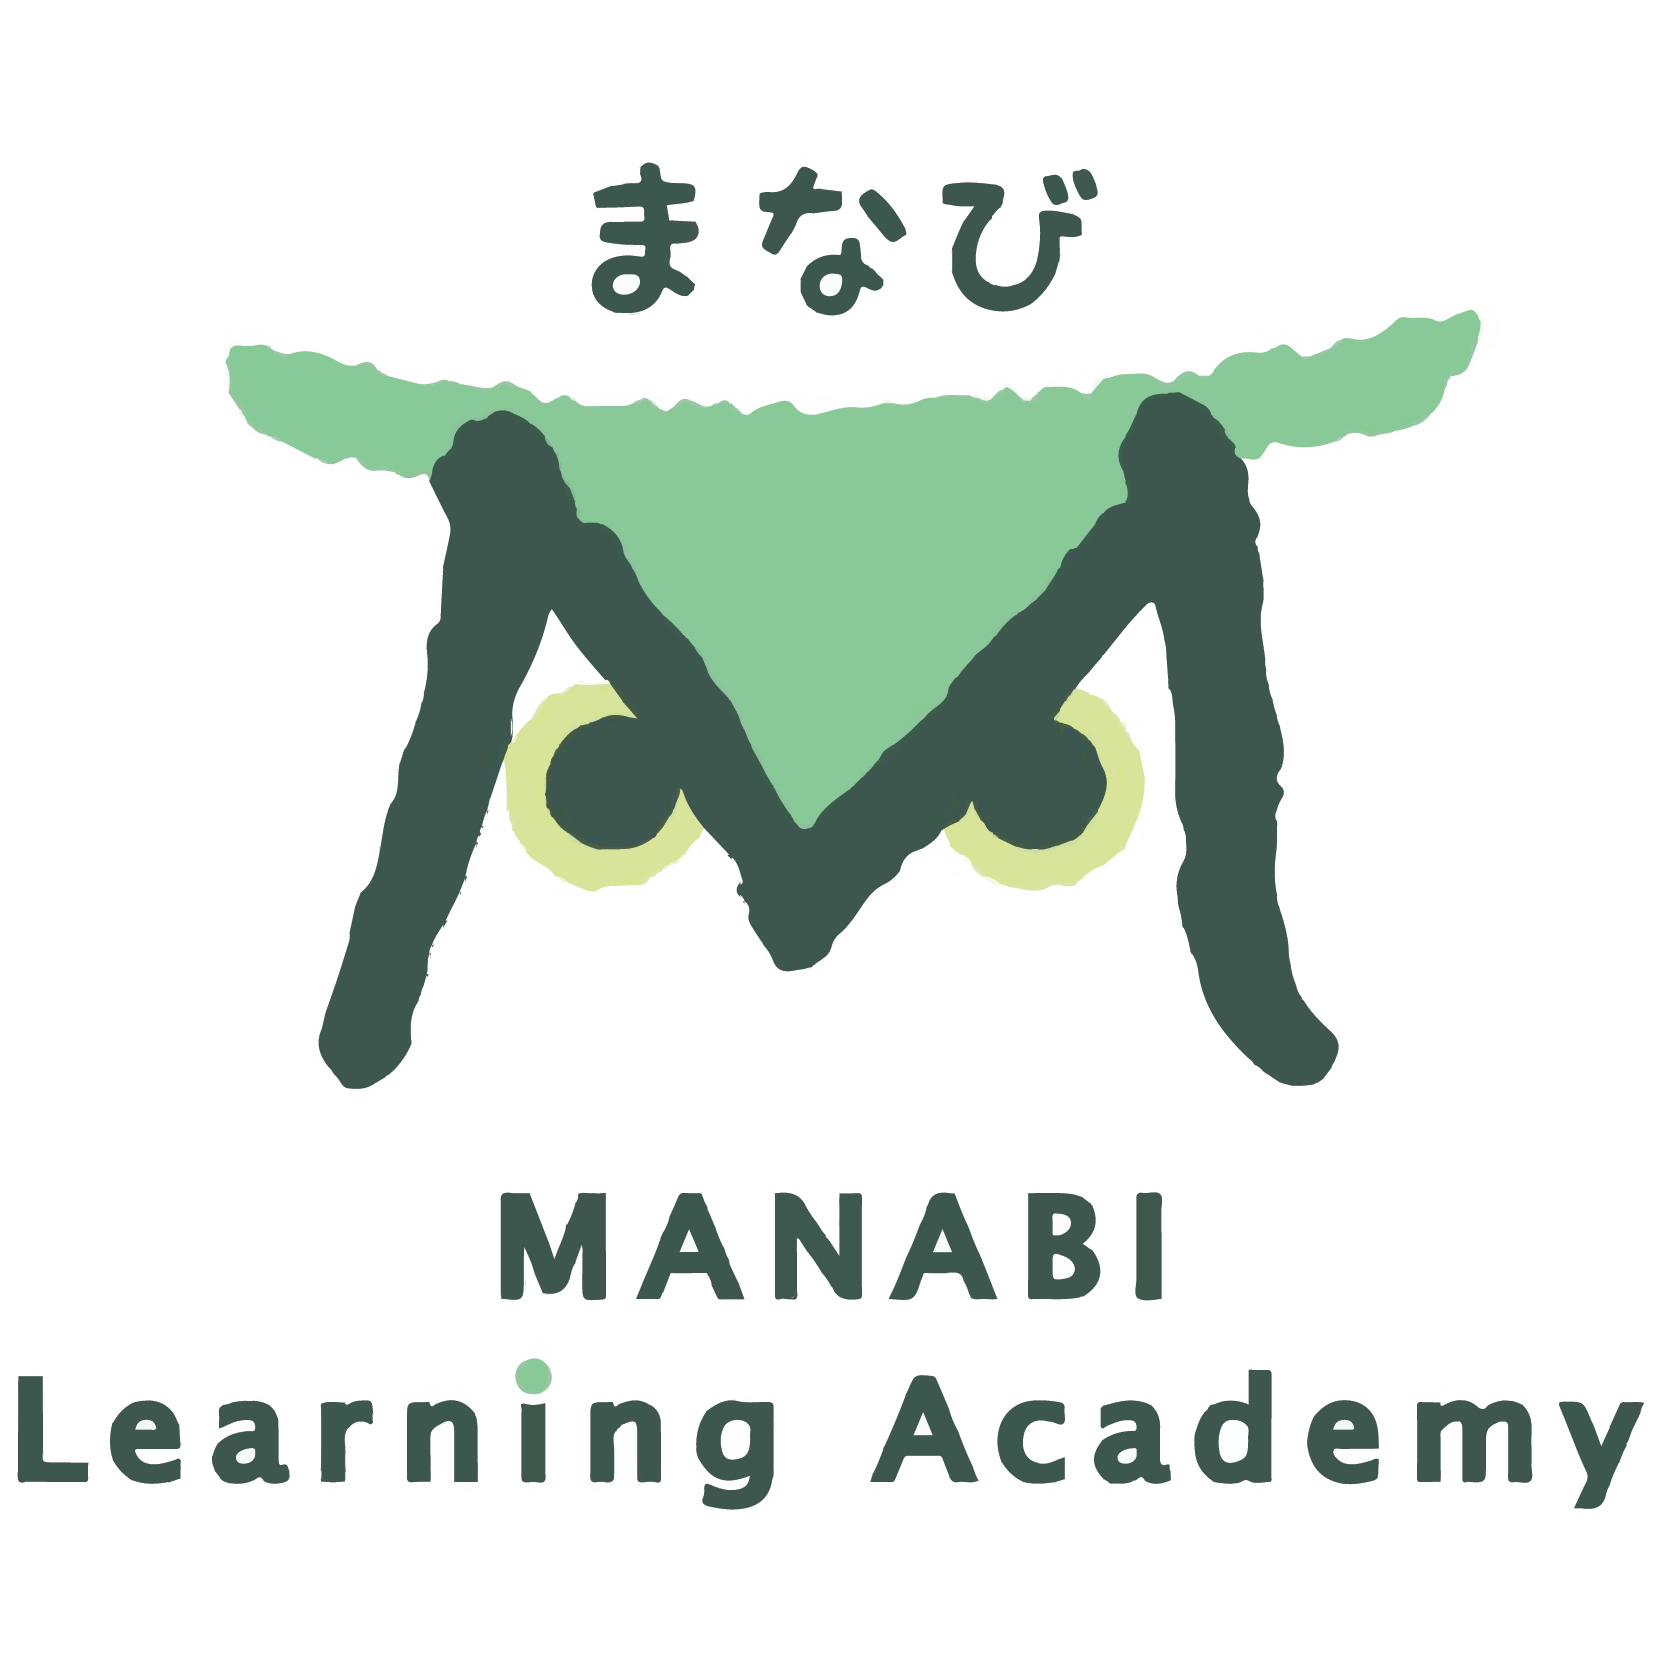 Manabi Learning Academy